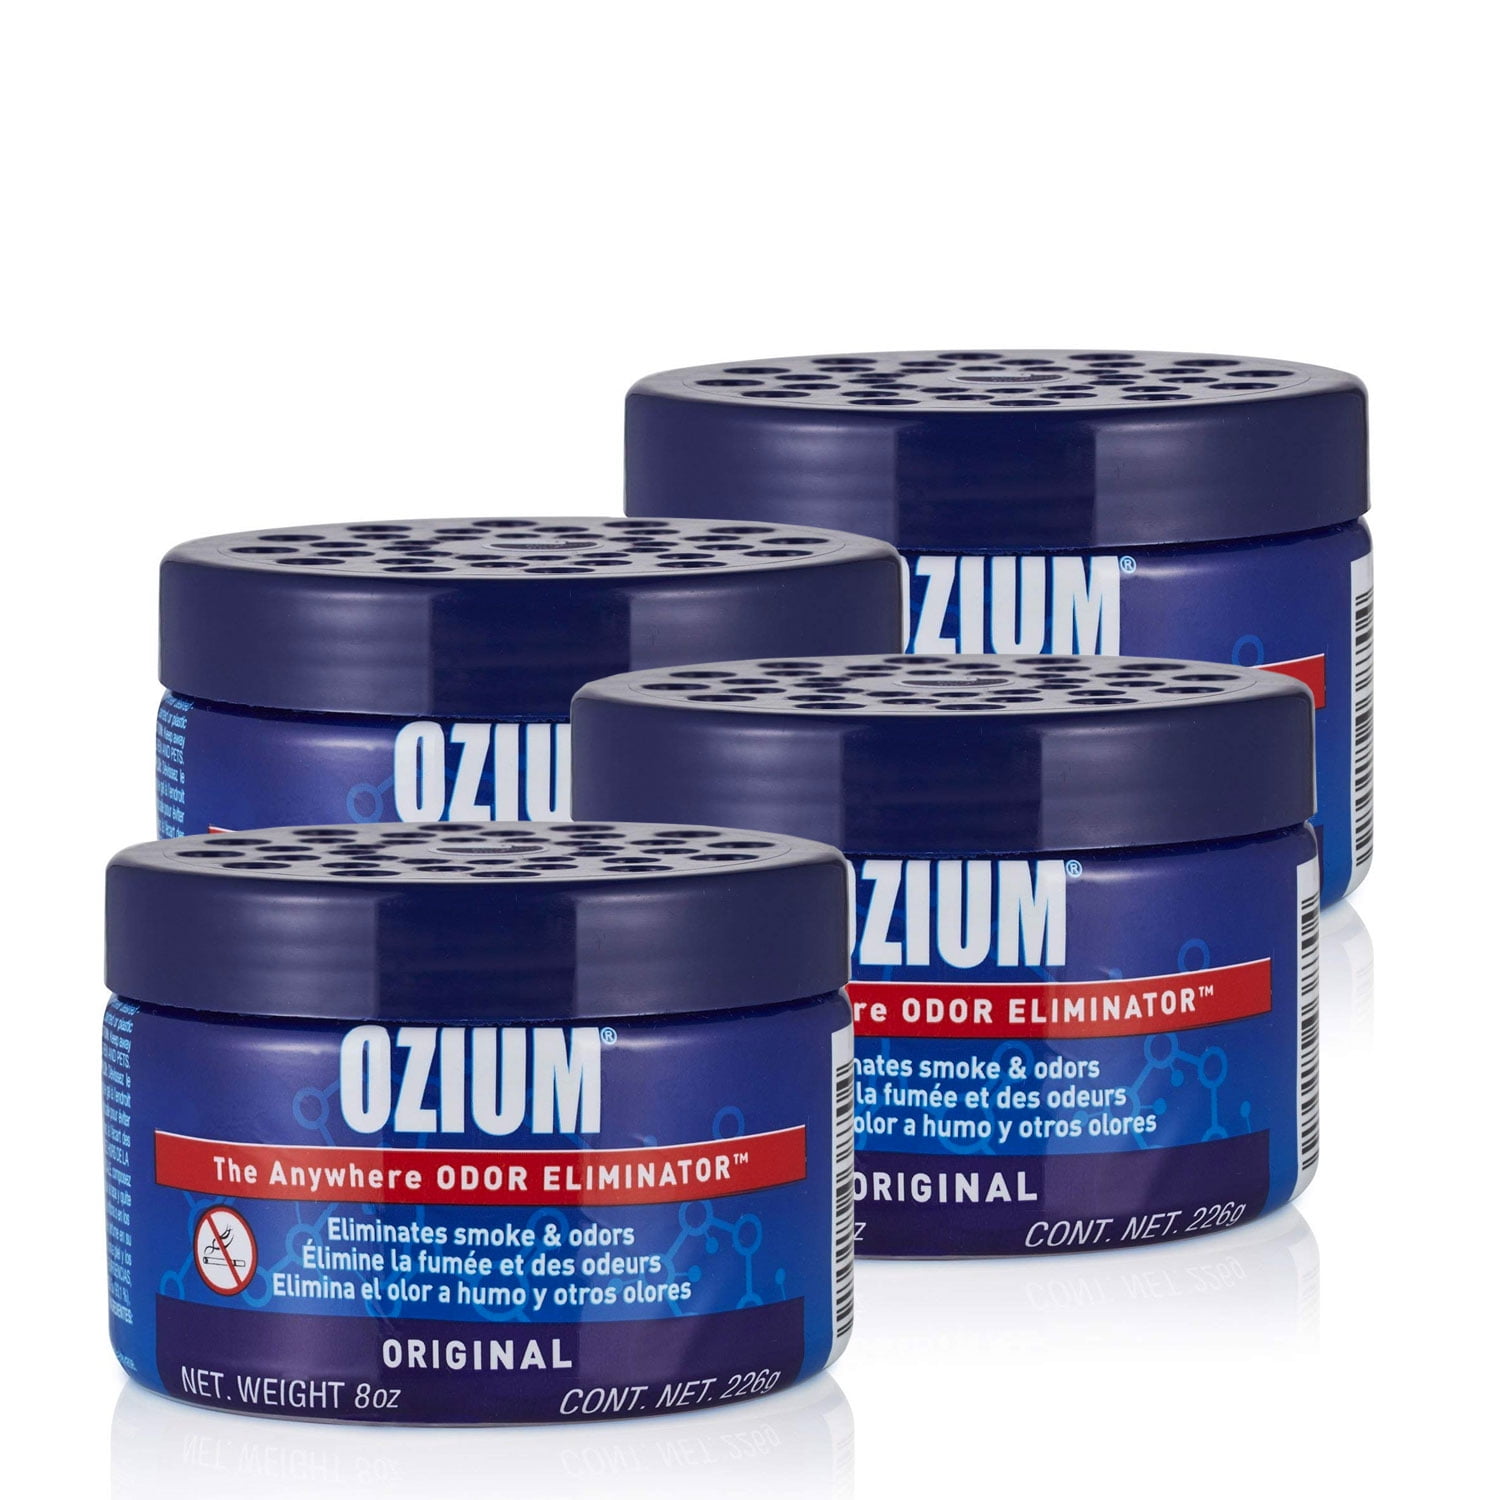 4 Pc Ozium 0.08oz Air Sanitizer Spray New Car Scent Odor